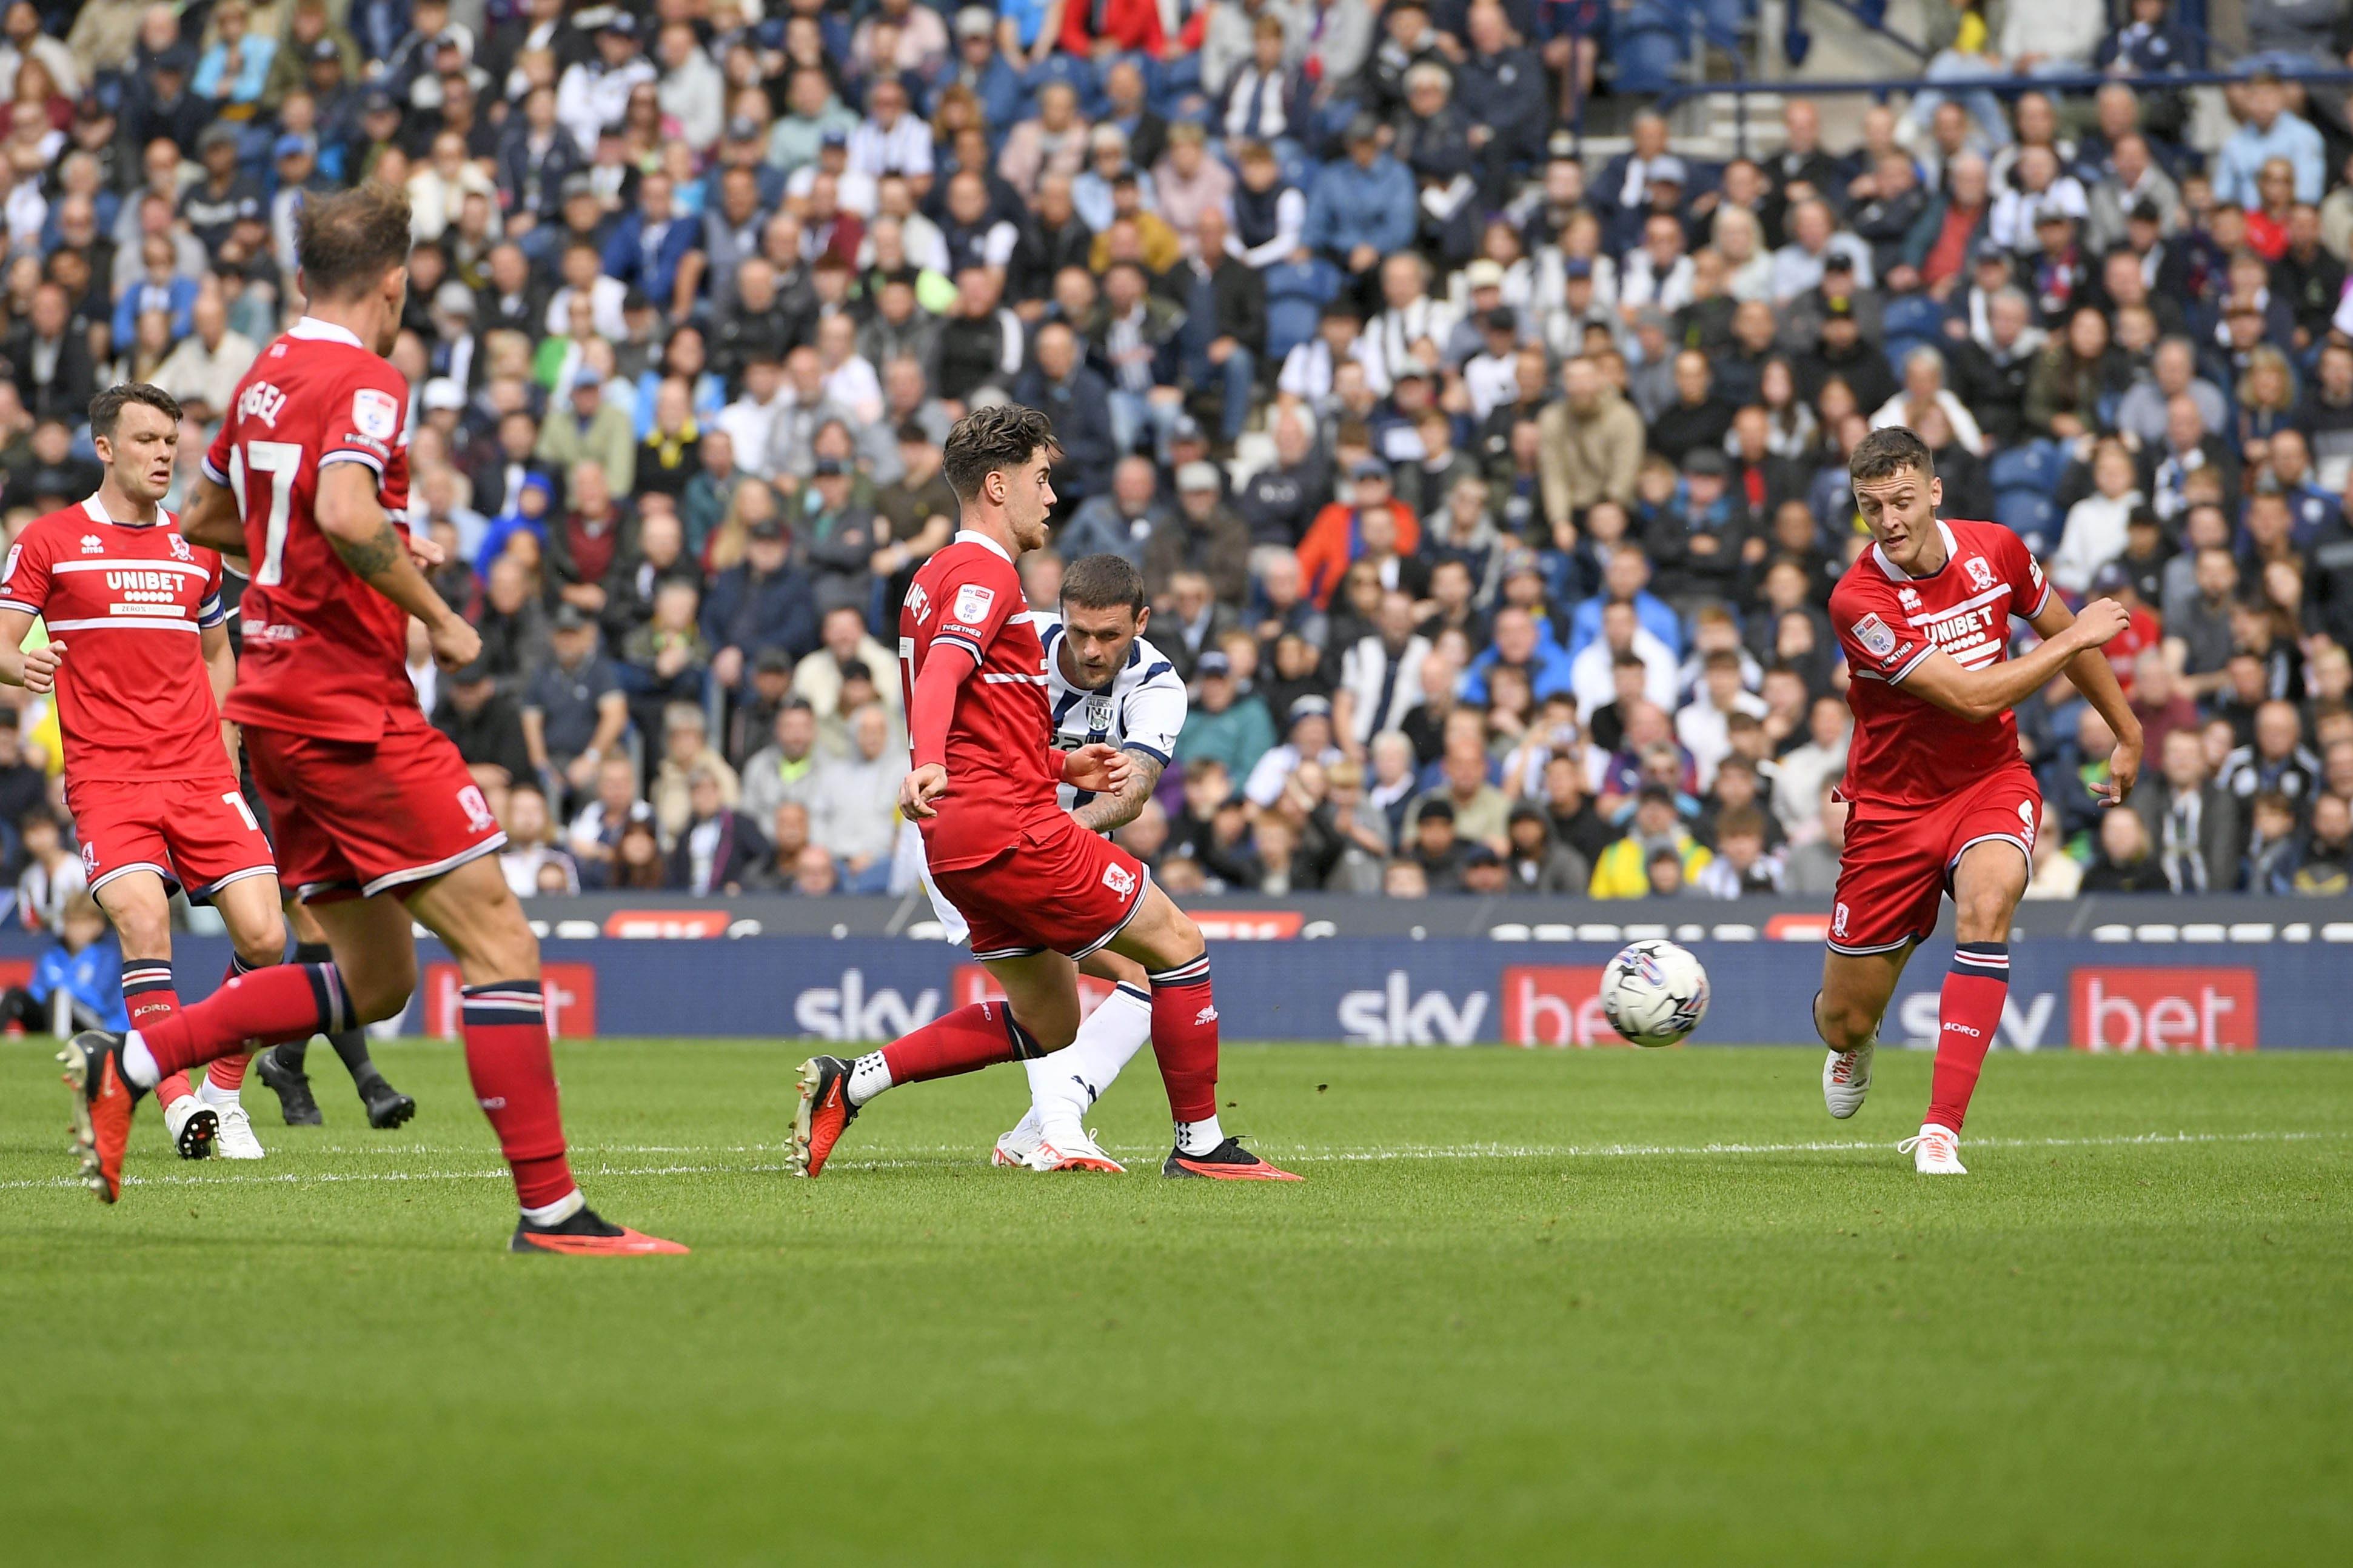 John Swift shoots at goal against Middlesbrough